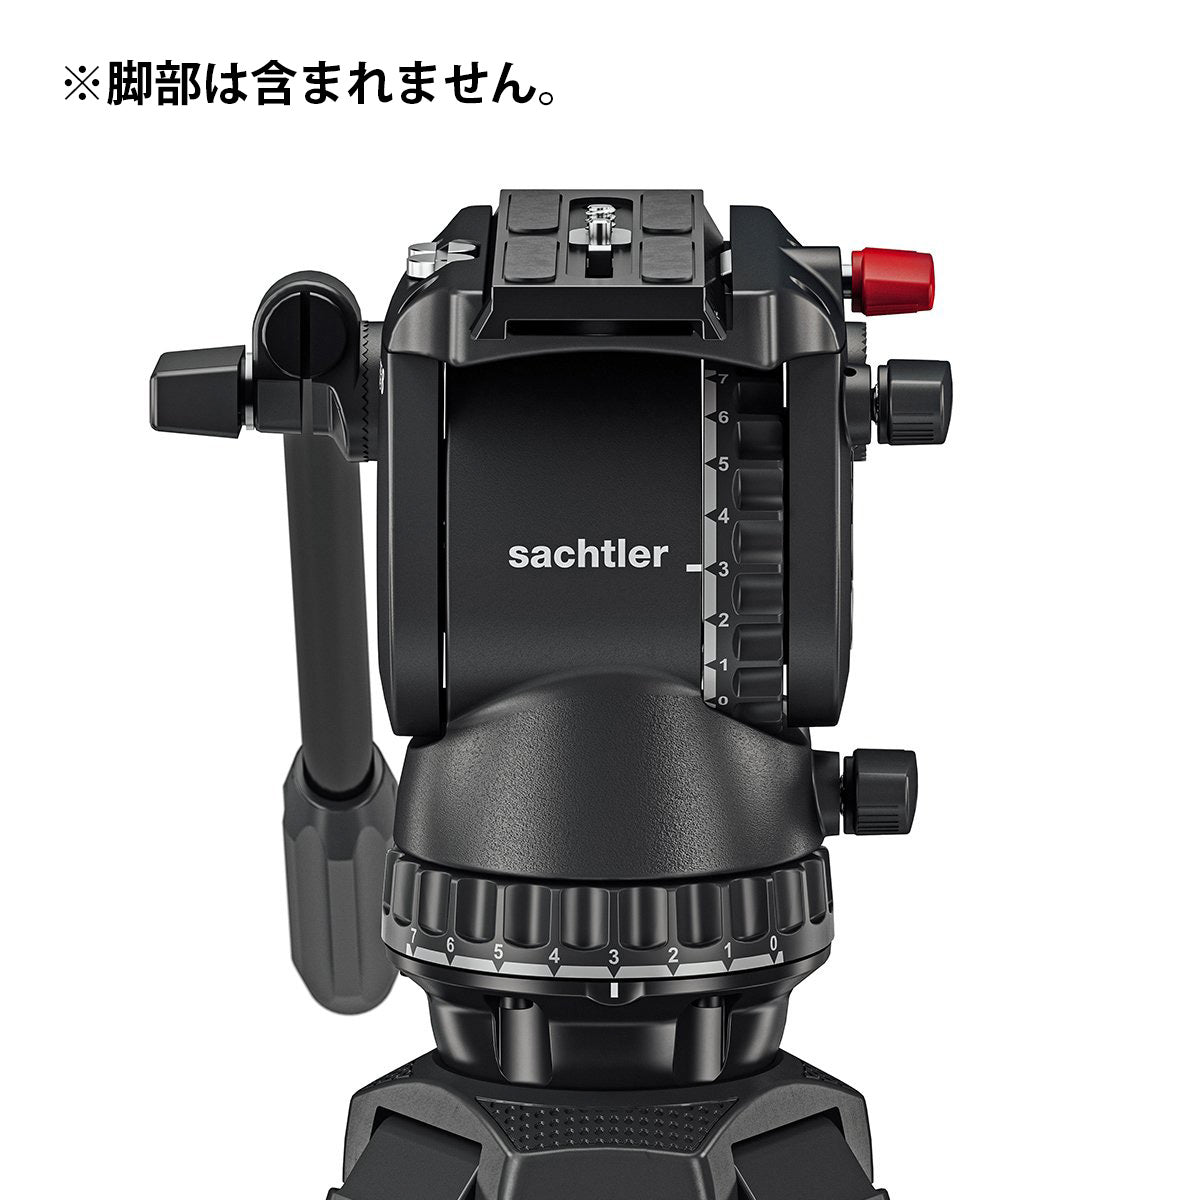 Sachtler(ザハトラー) 75mmヘッド (三脚なし) FSB 8 Mk II [S2069-0001]